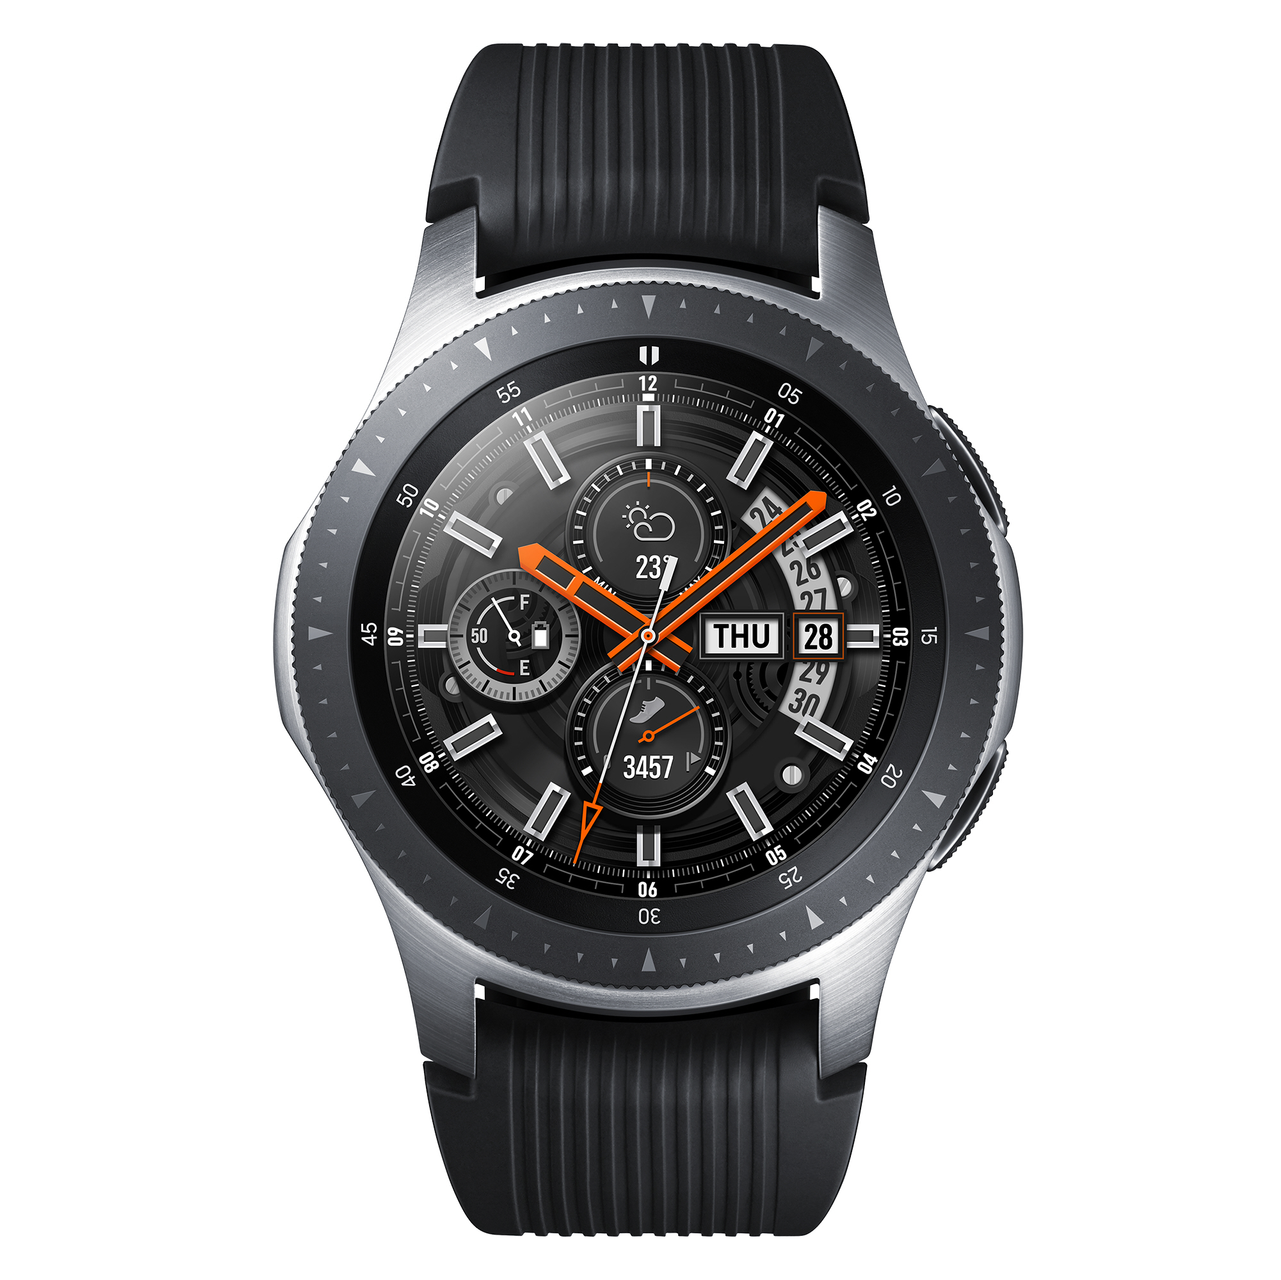 Galaxy Watch Smartwatch with LTE 